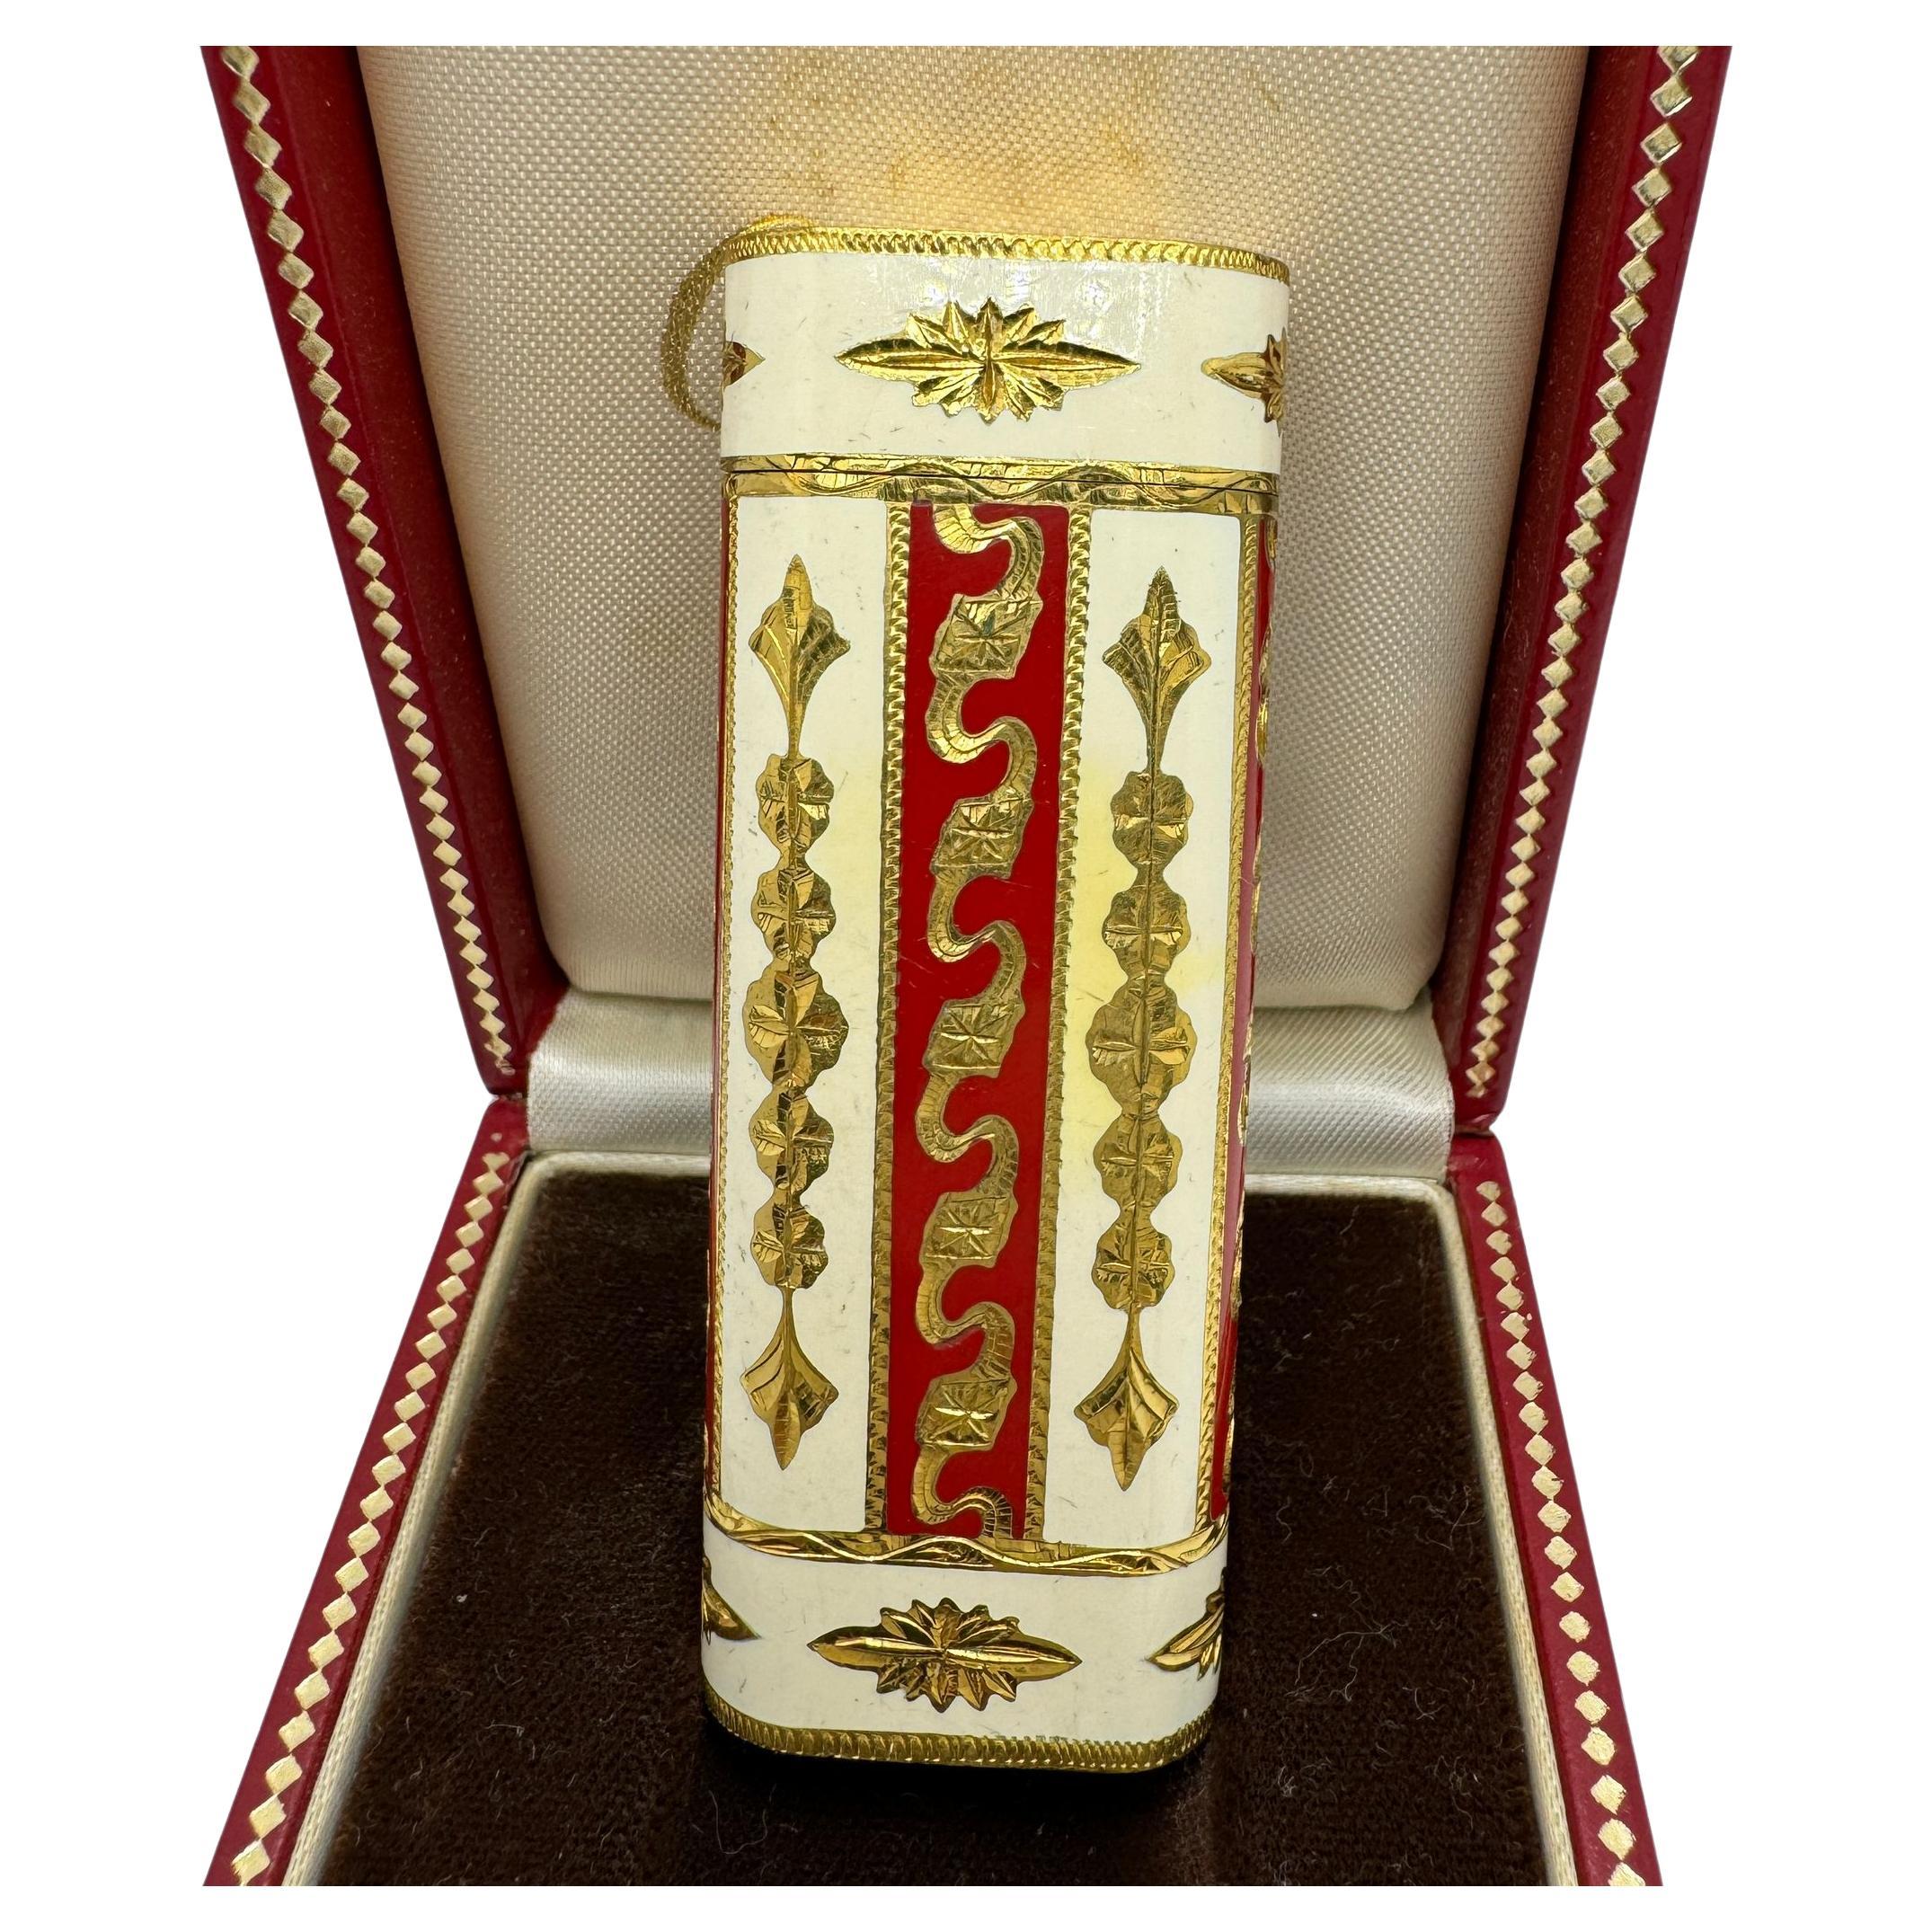 Le Must de Cartier Very Rare Royking Lighter, 18k Gold Plating & Enamel Inlay 